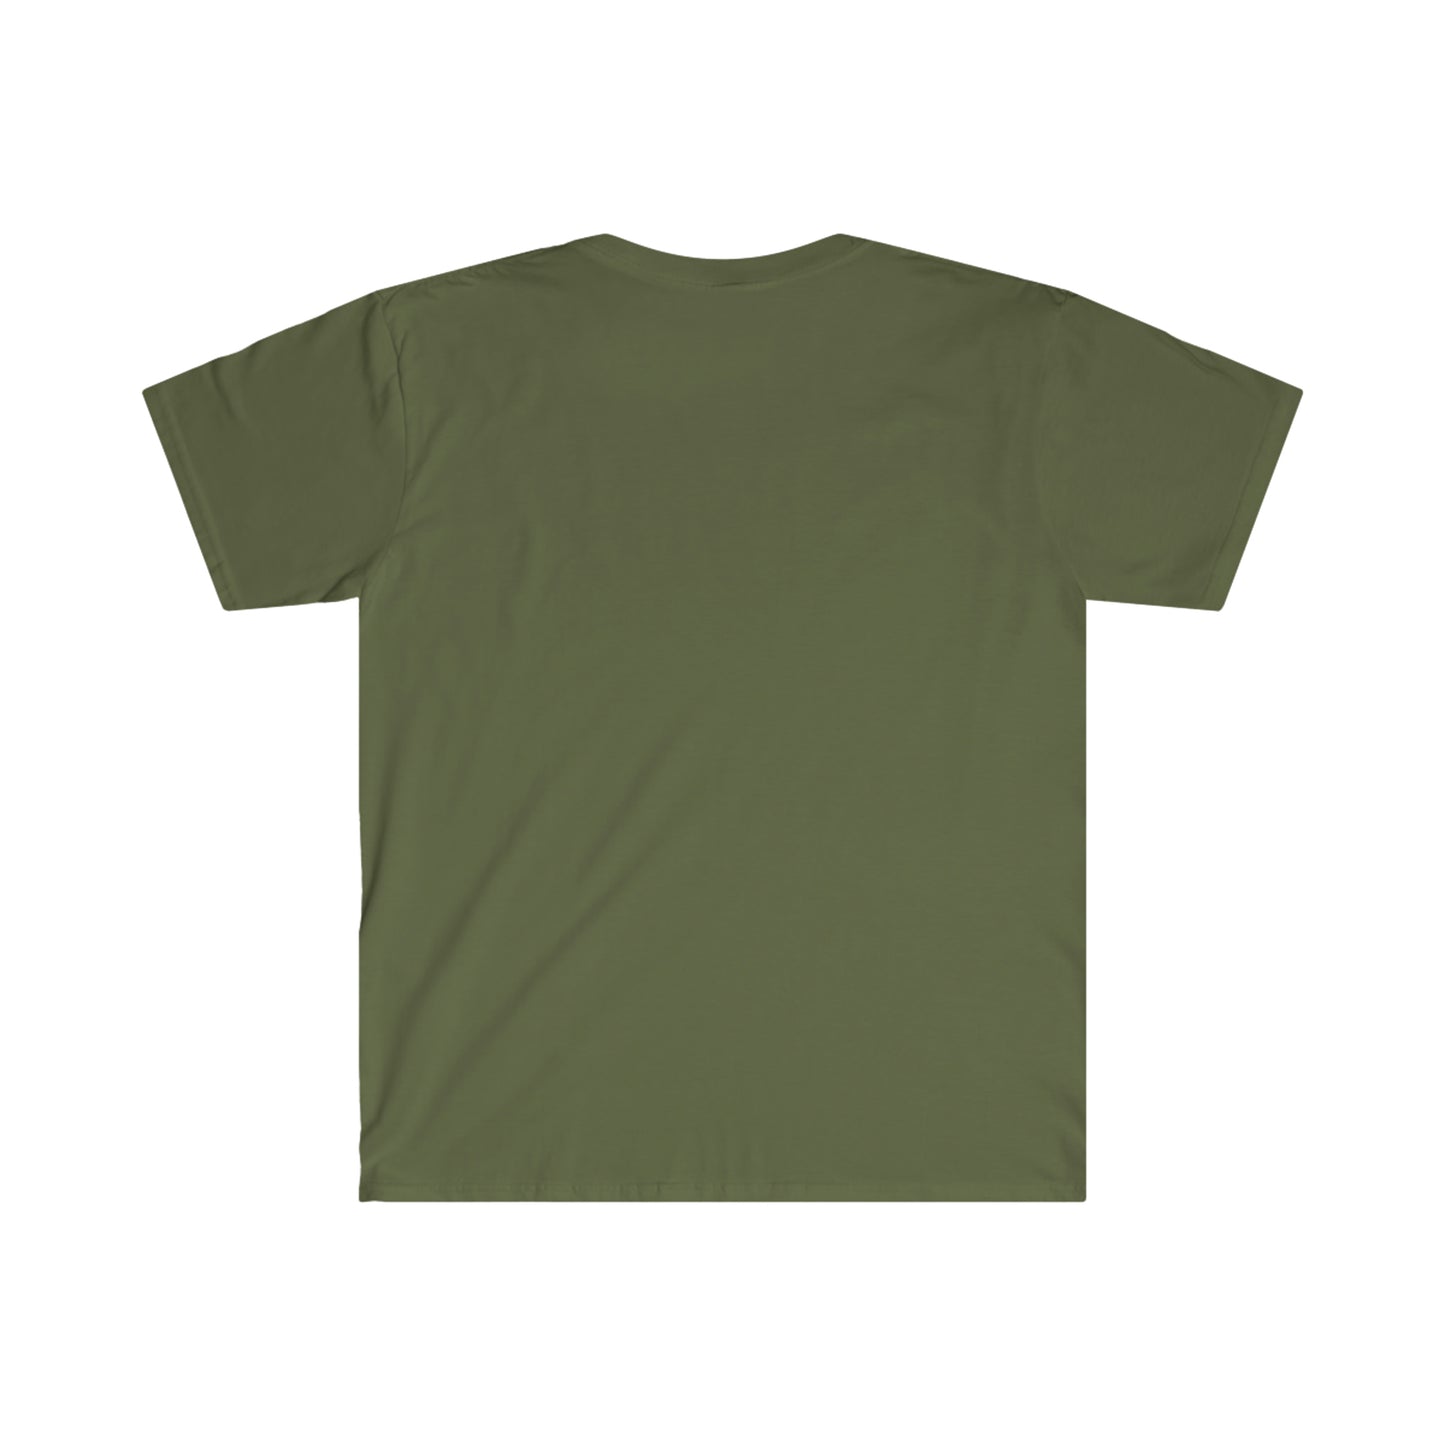 Chasing Light - Softstyle T-Shirt